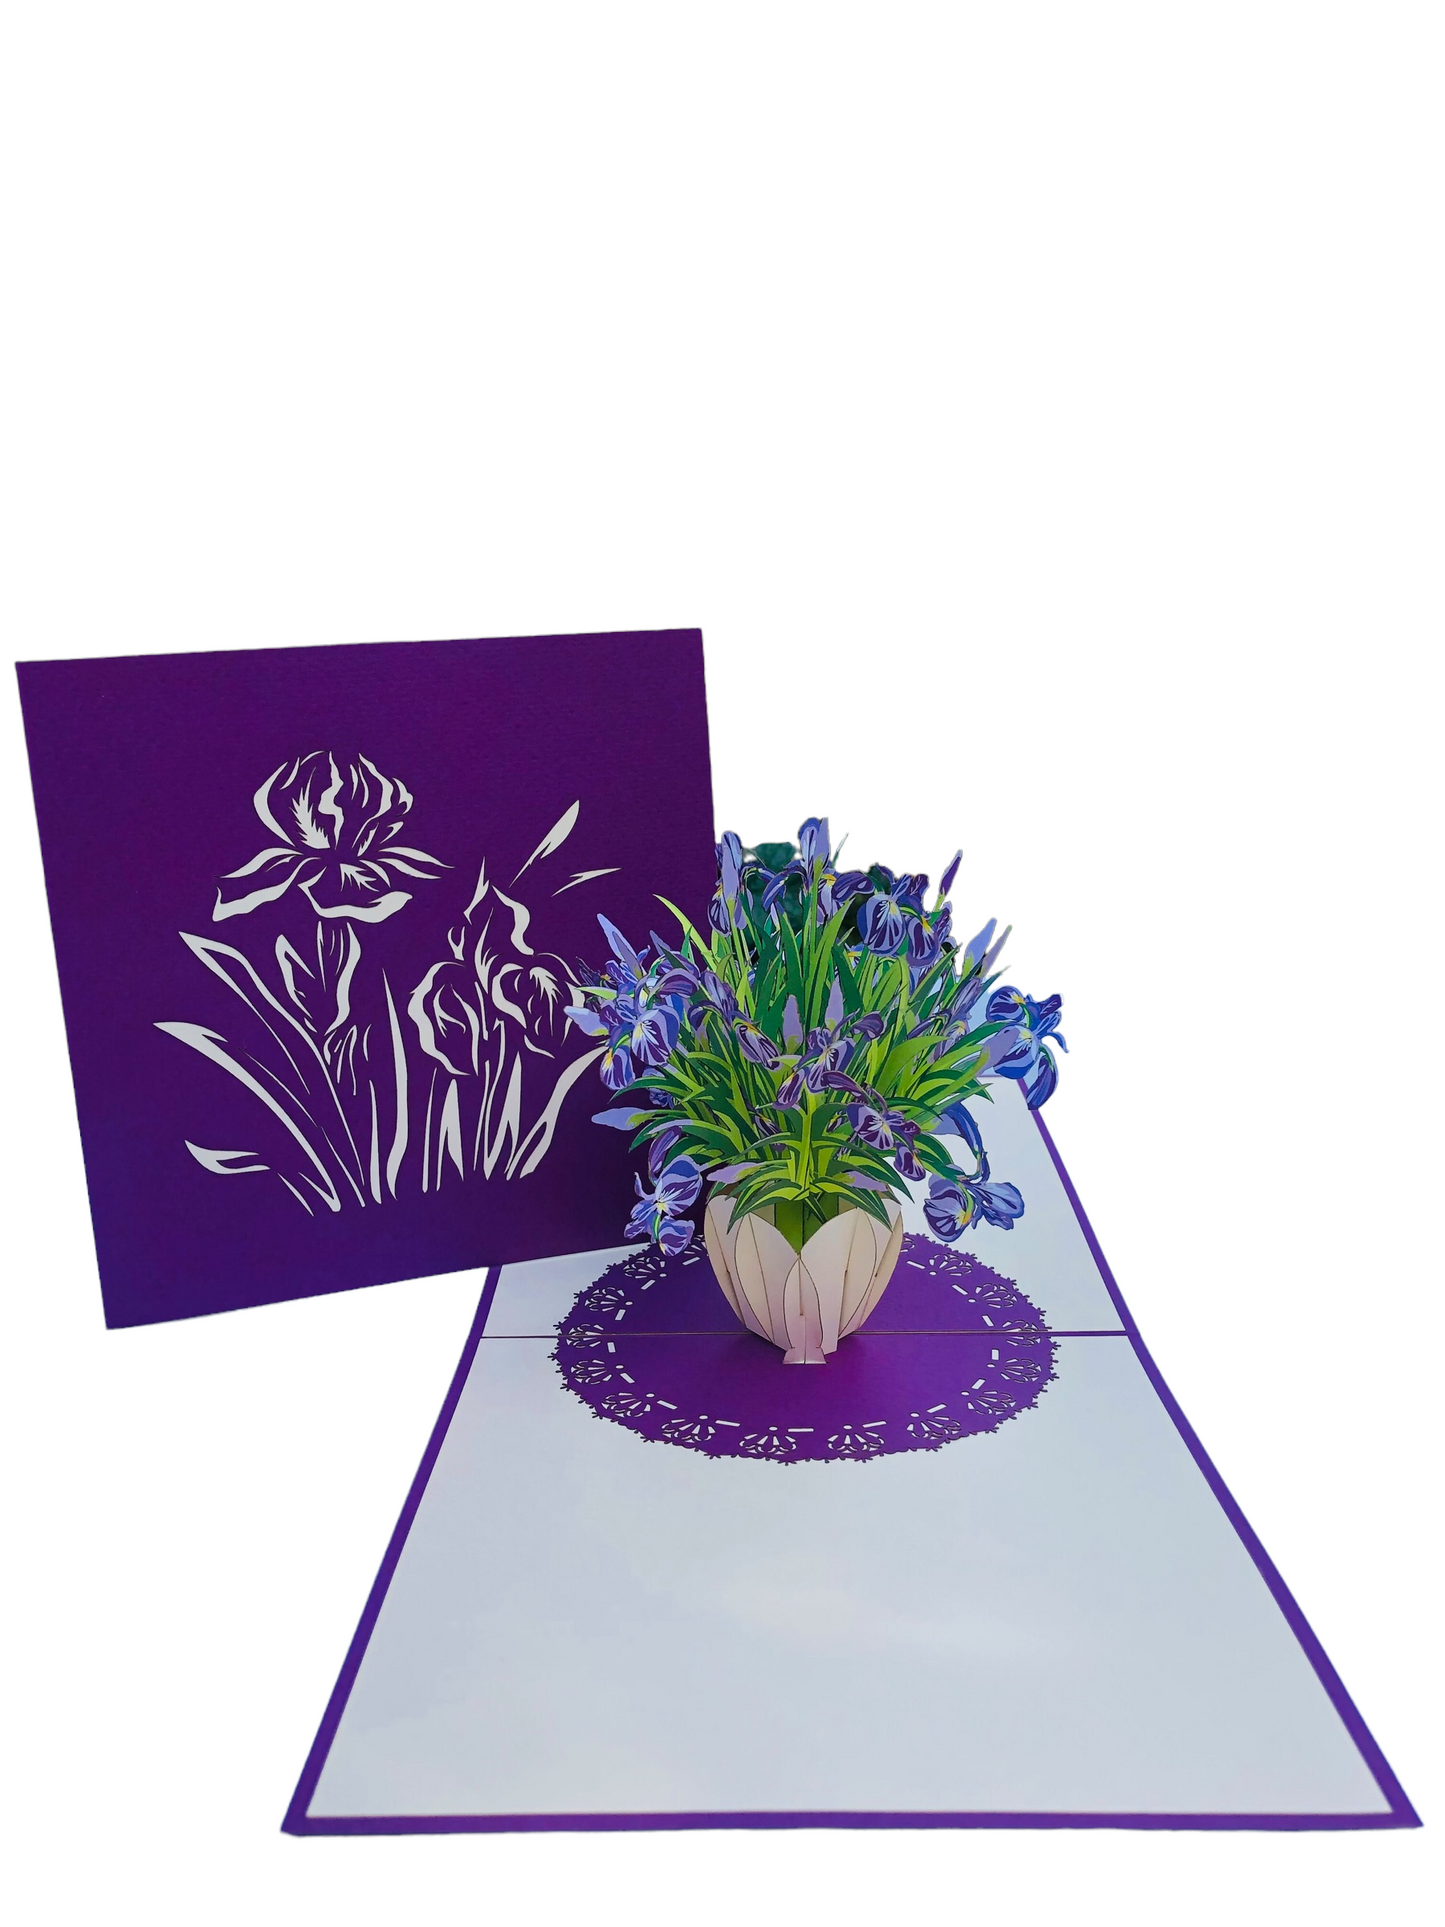 Iris Flowers Pop Up Card Pop Up Cards